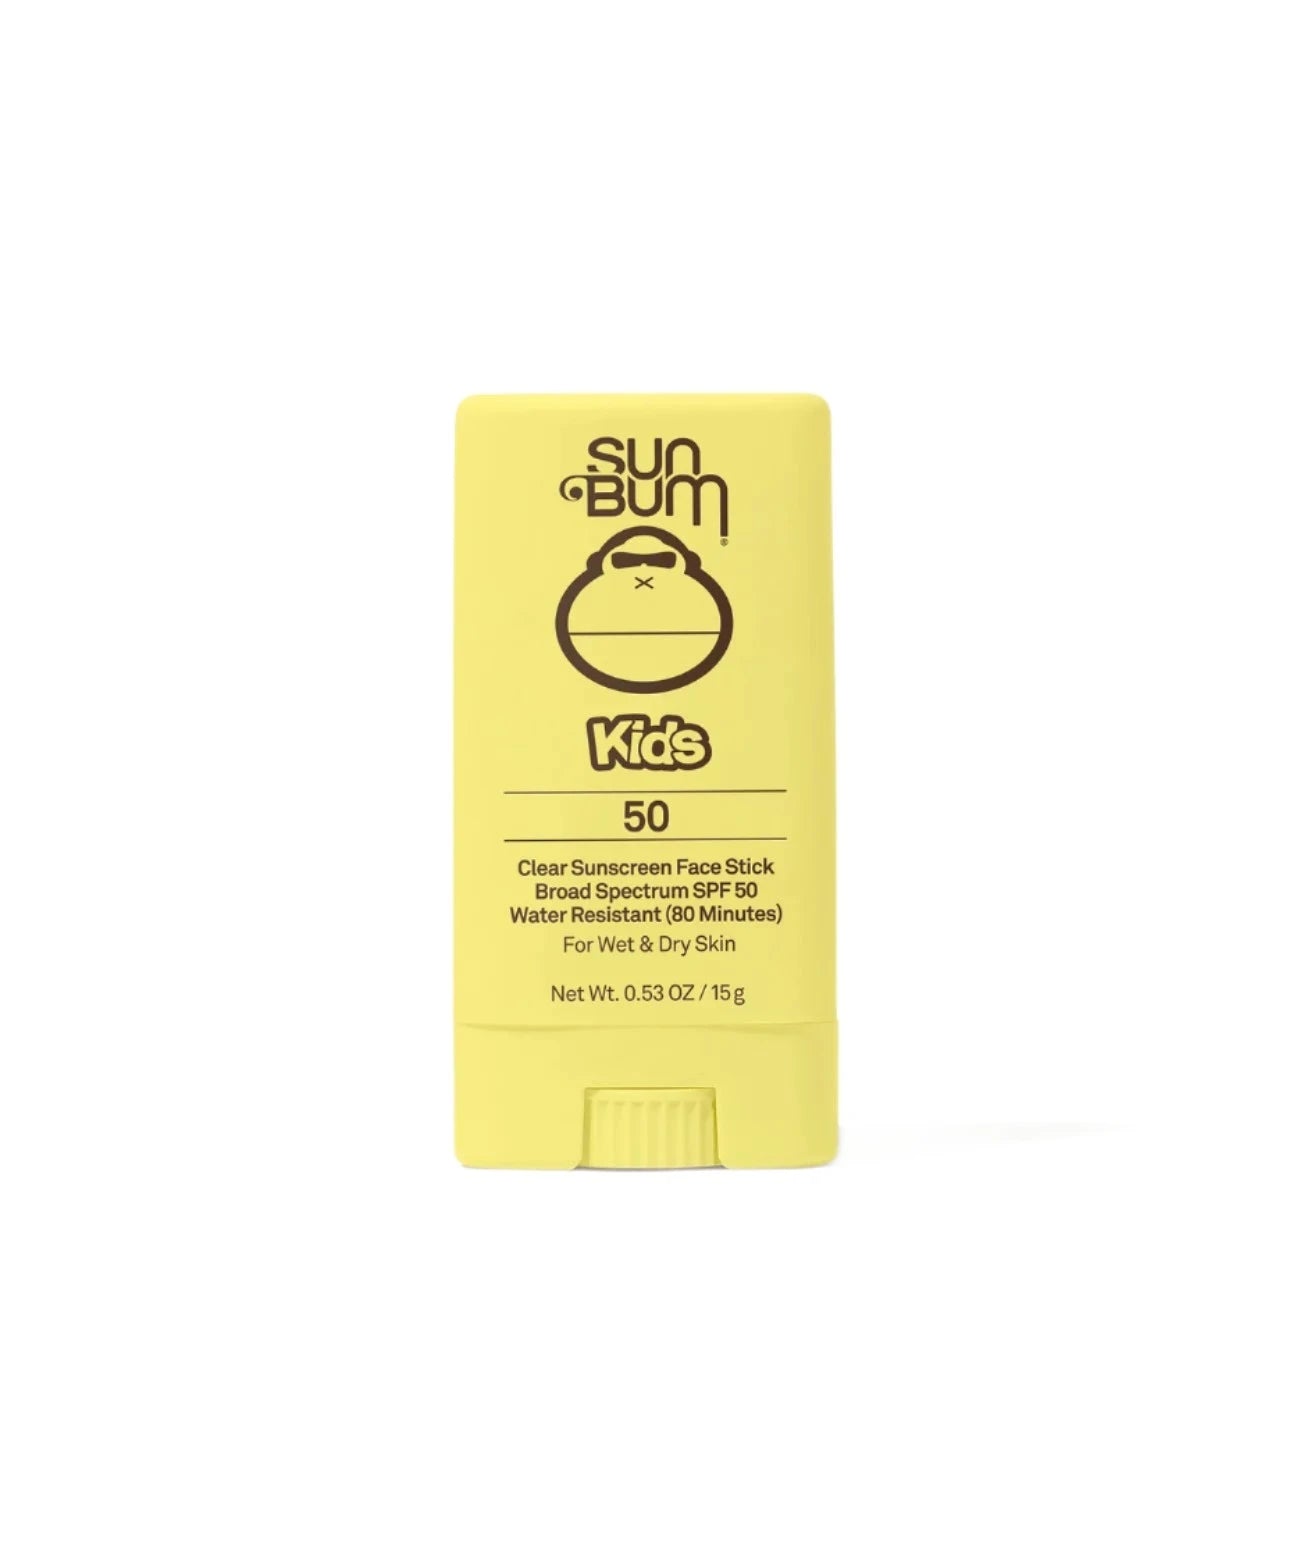 SUN BUM Kids SPF 50 Clear Sunscreen Face Stick Sunscreen Sun Bum 